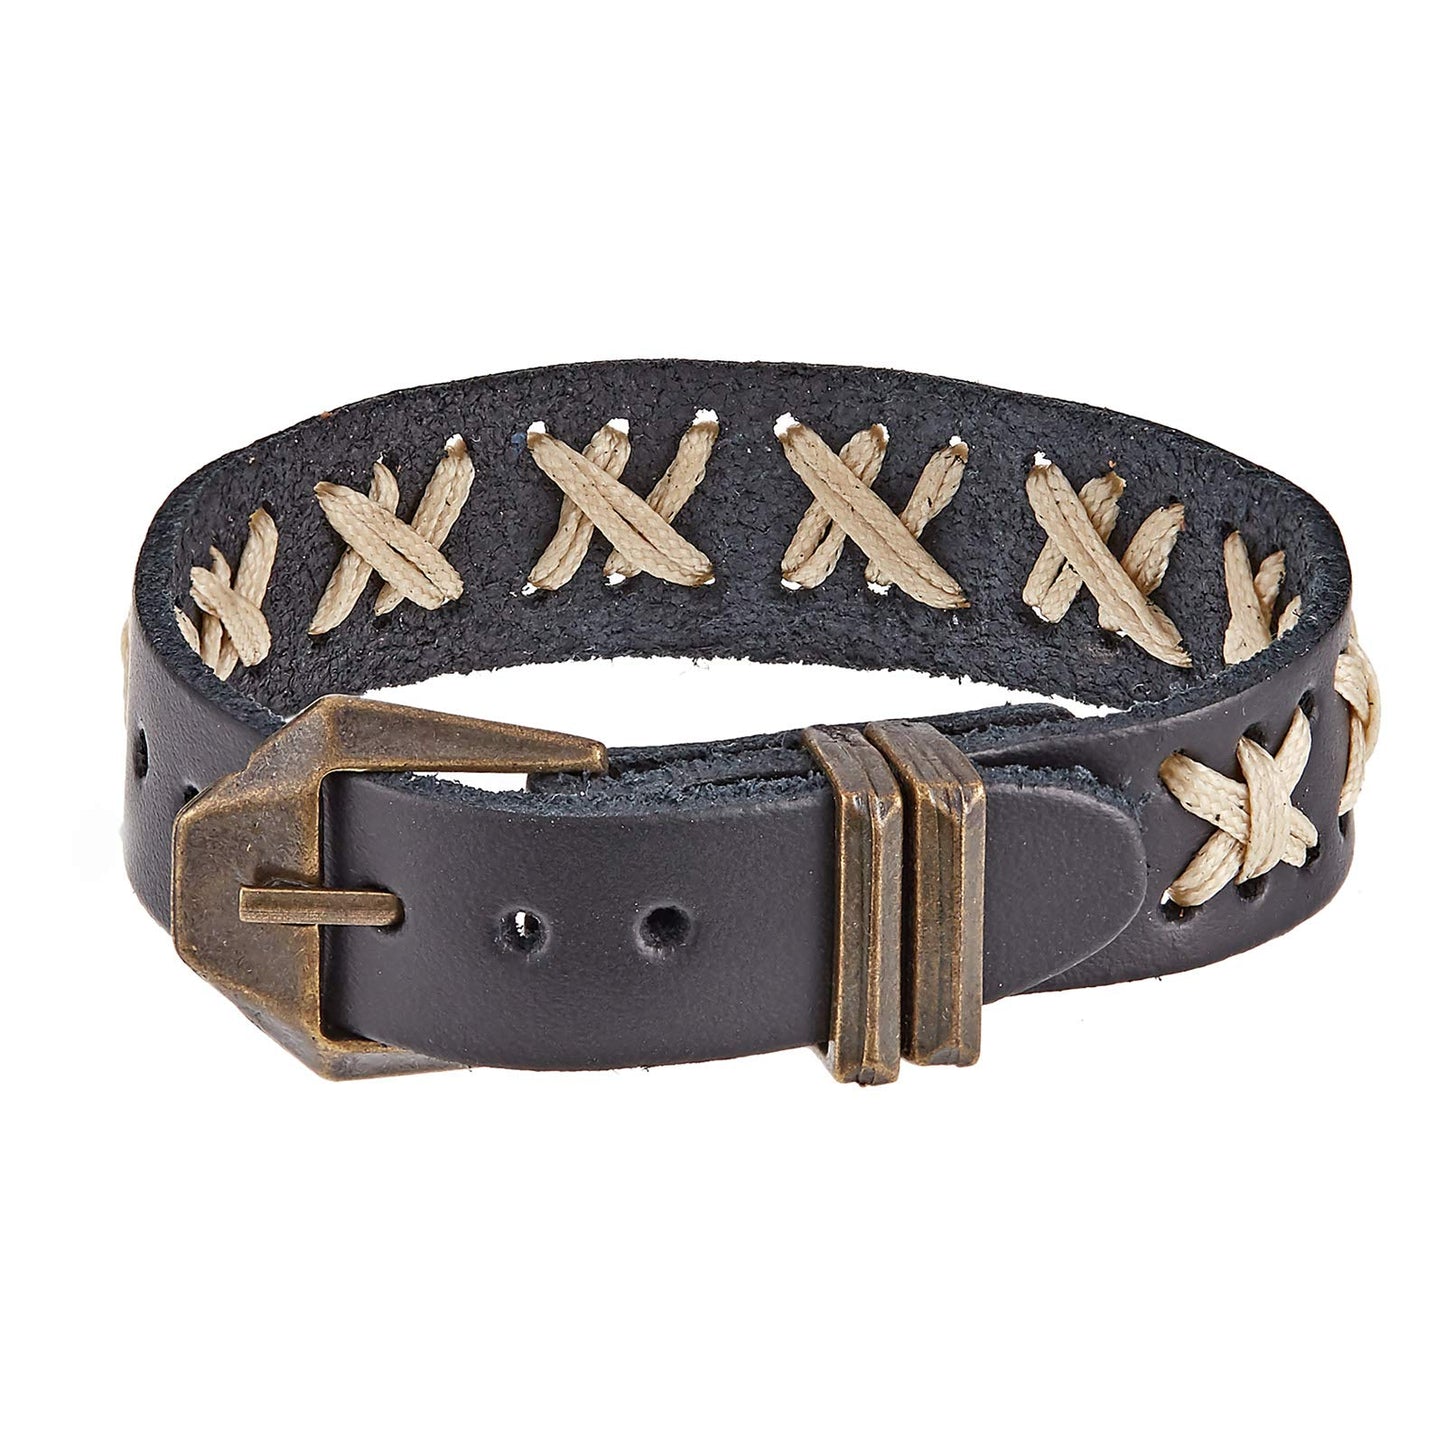 Alwan Black Leather Bracelet for Men - EE8349BAWM